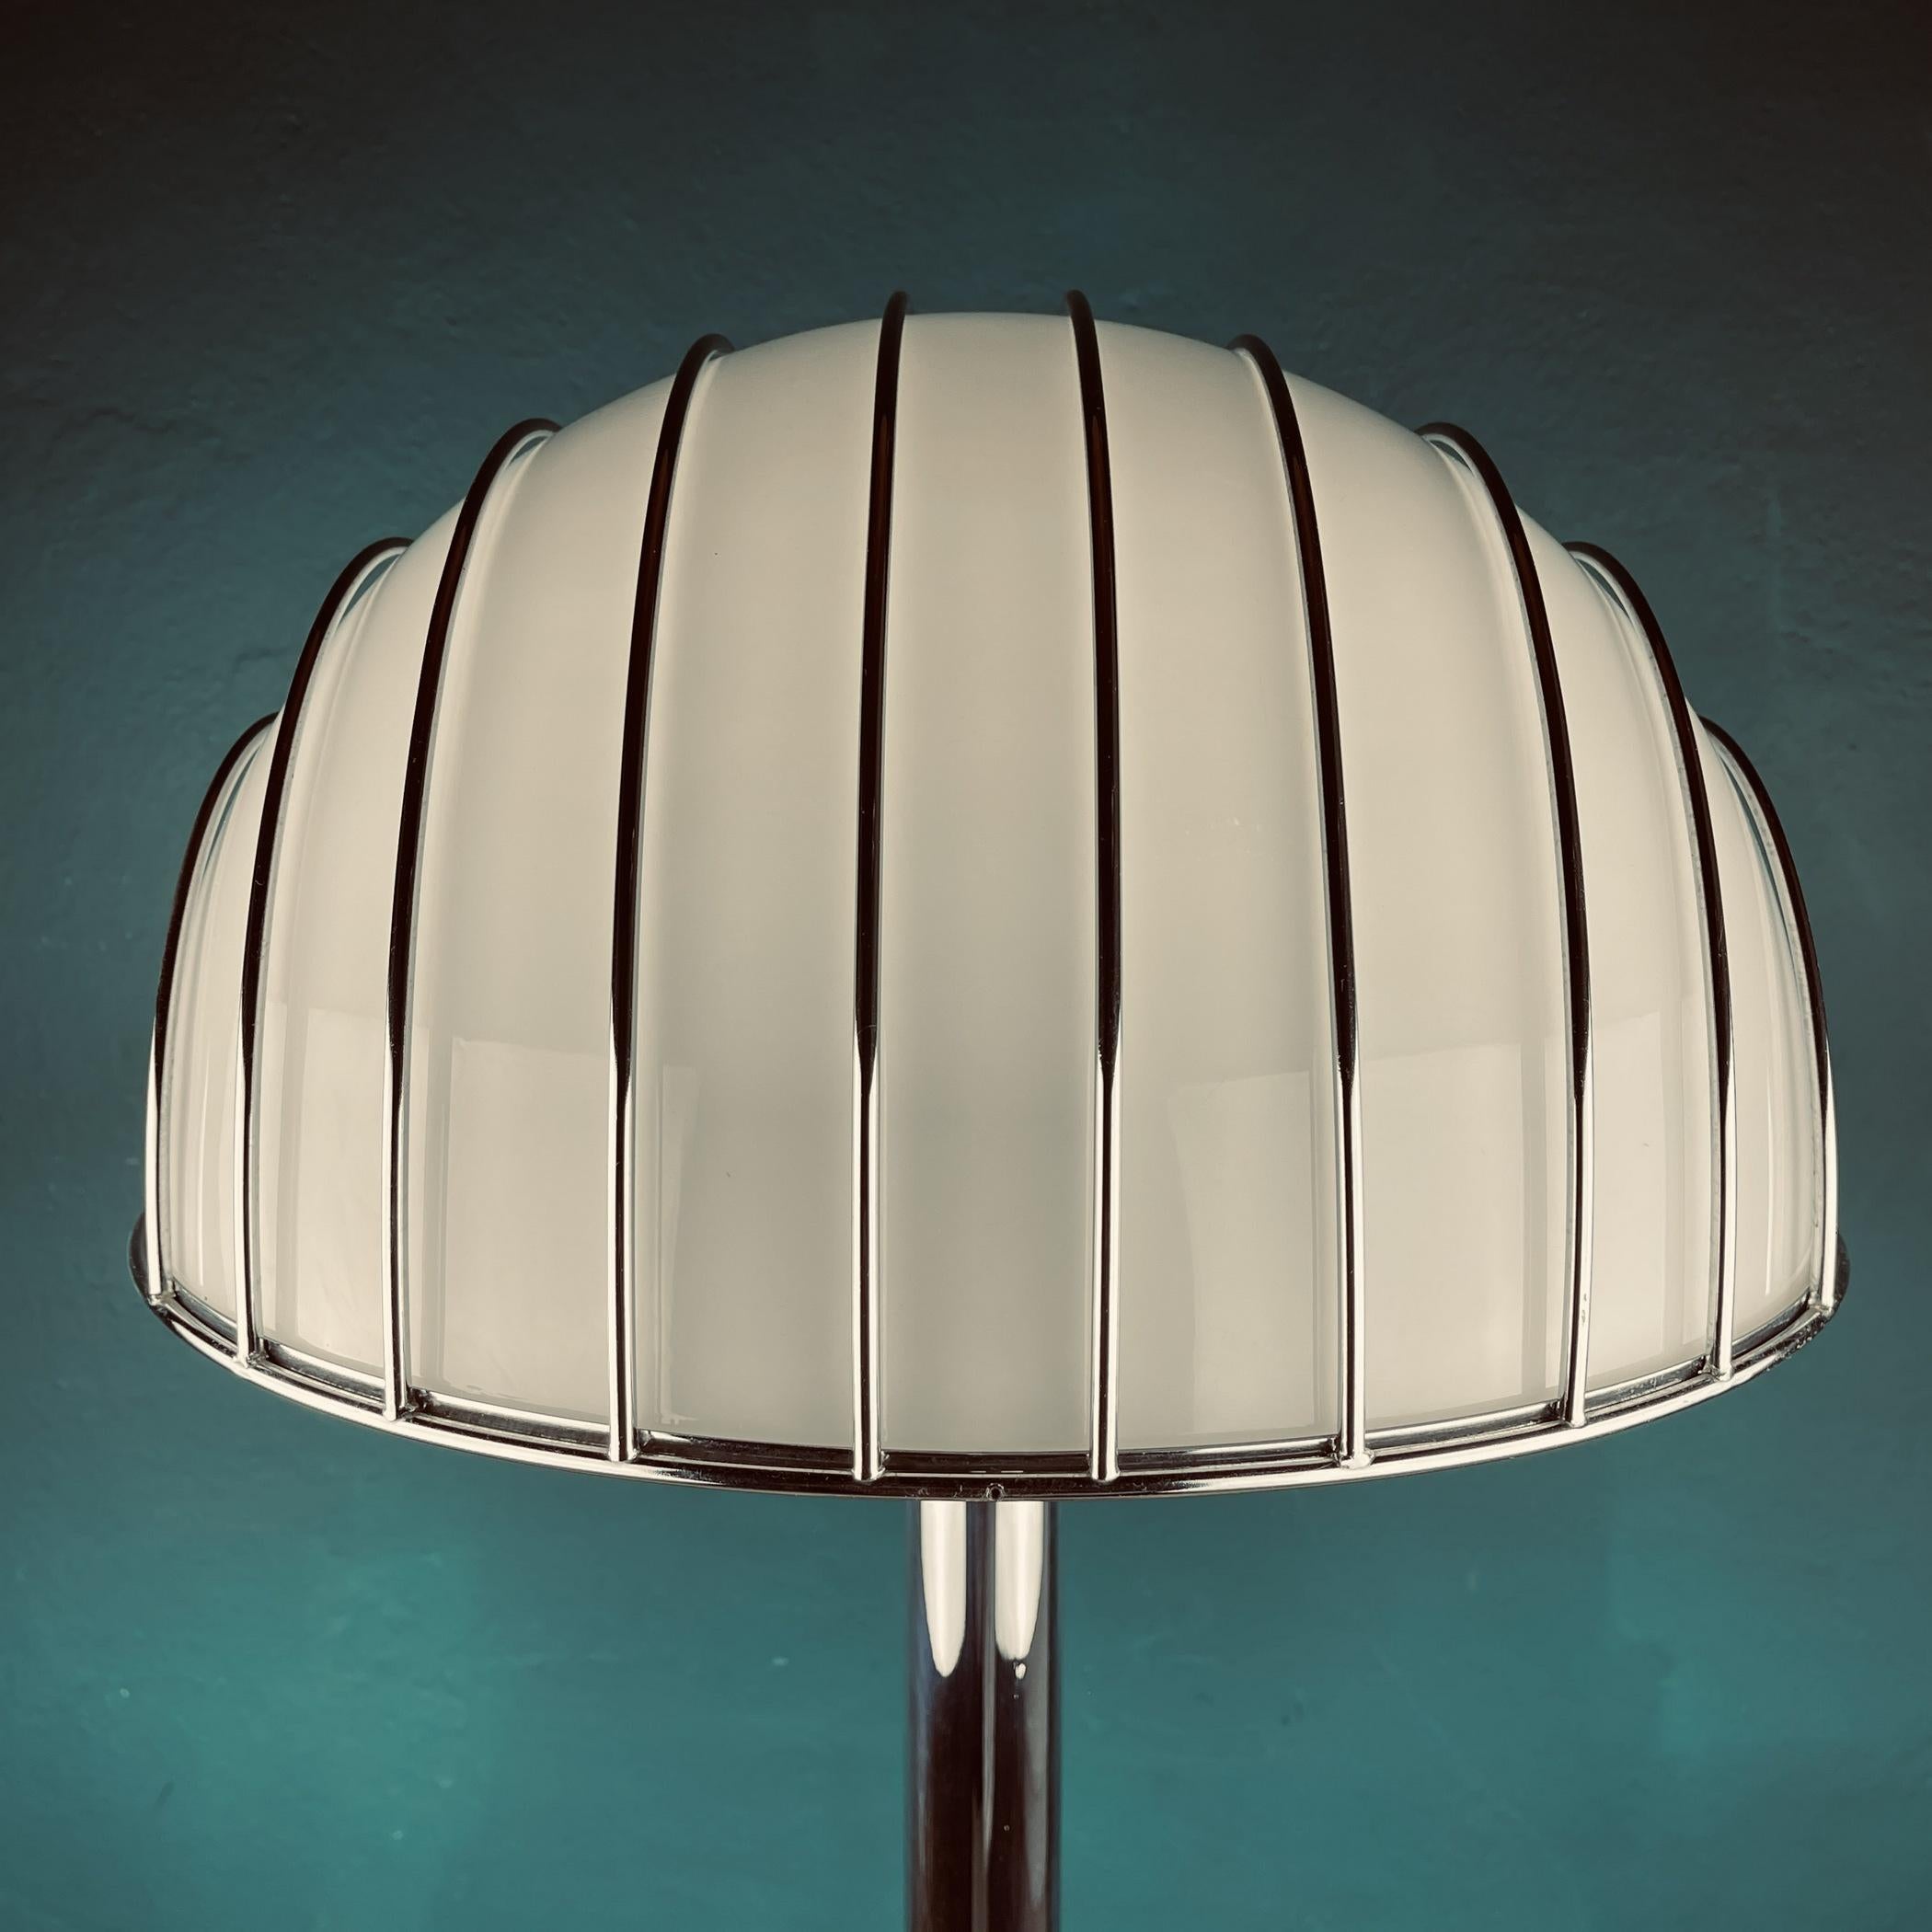 Mid-20th Century Mid-Century Modern Floor Lamp by Adalberto Dal Lago for Esperia Italy 1960s For Sale